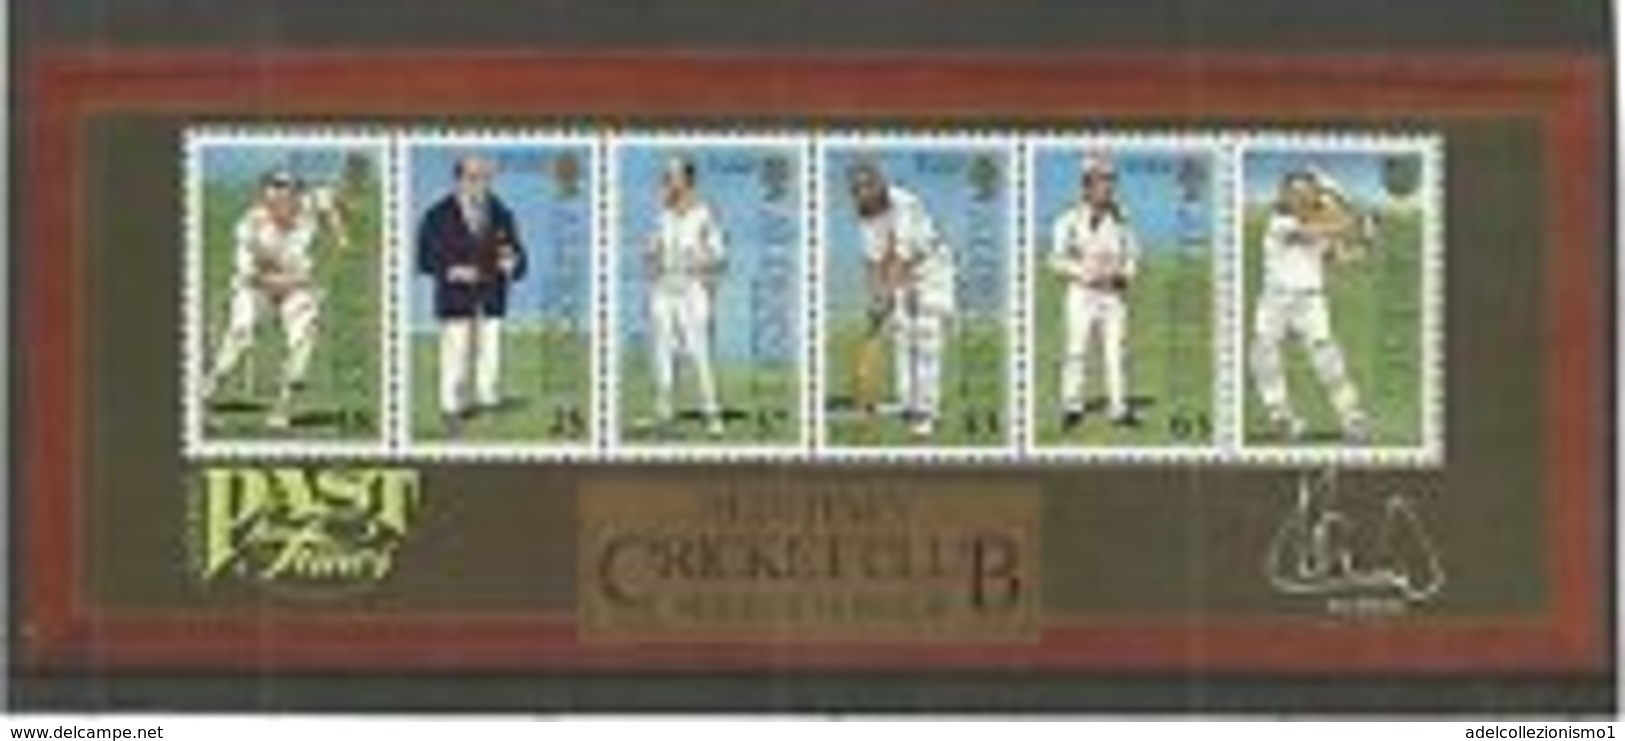 91804) ALDERNEY - 1997, Cricket Club Foglio -MNH** - Alderney